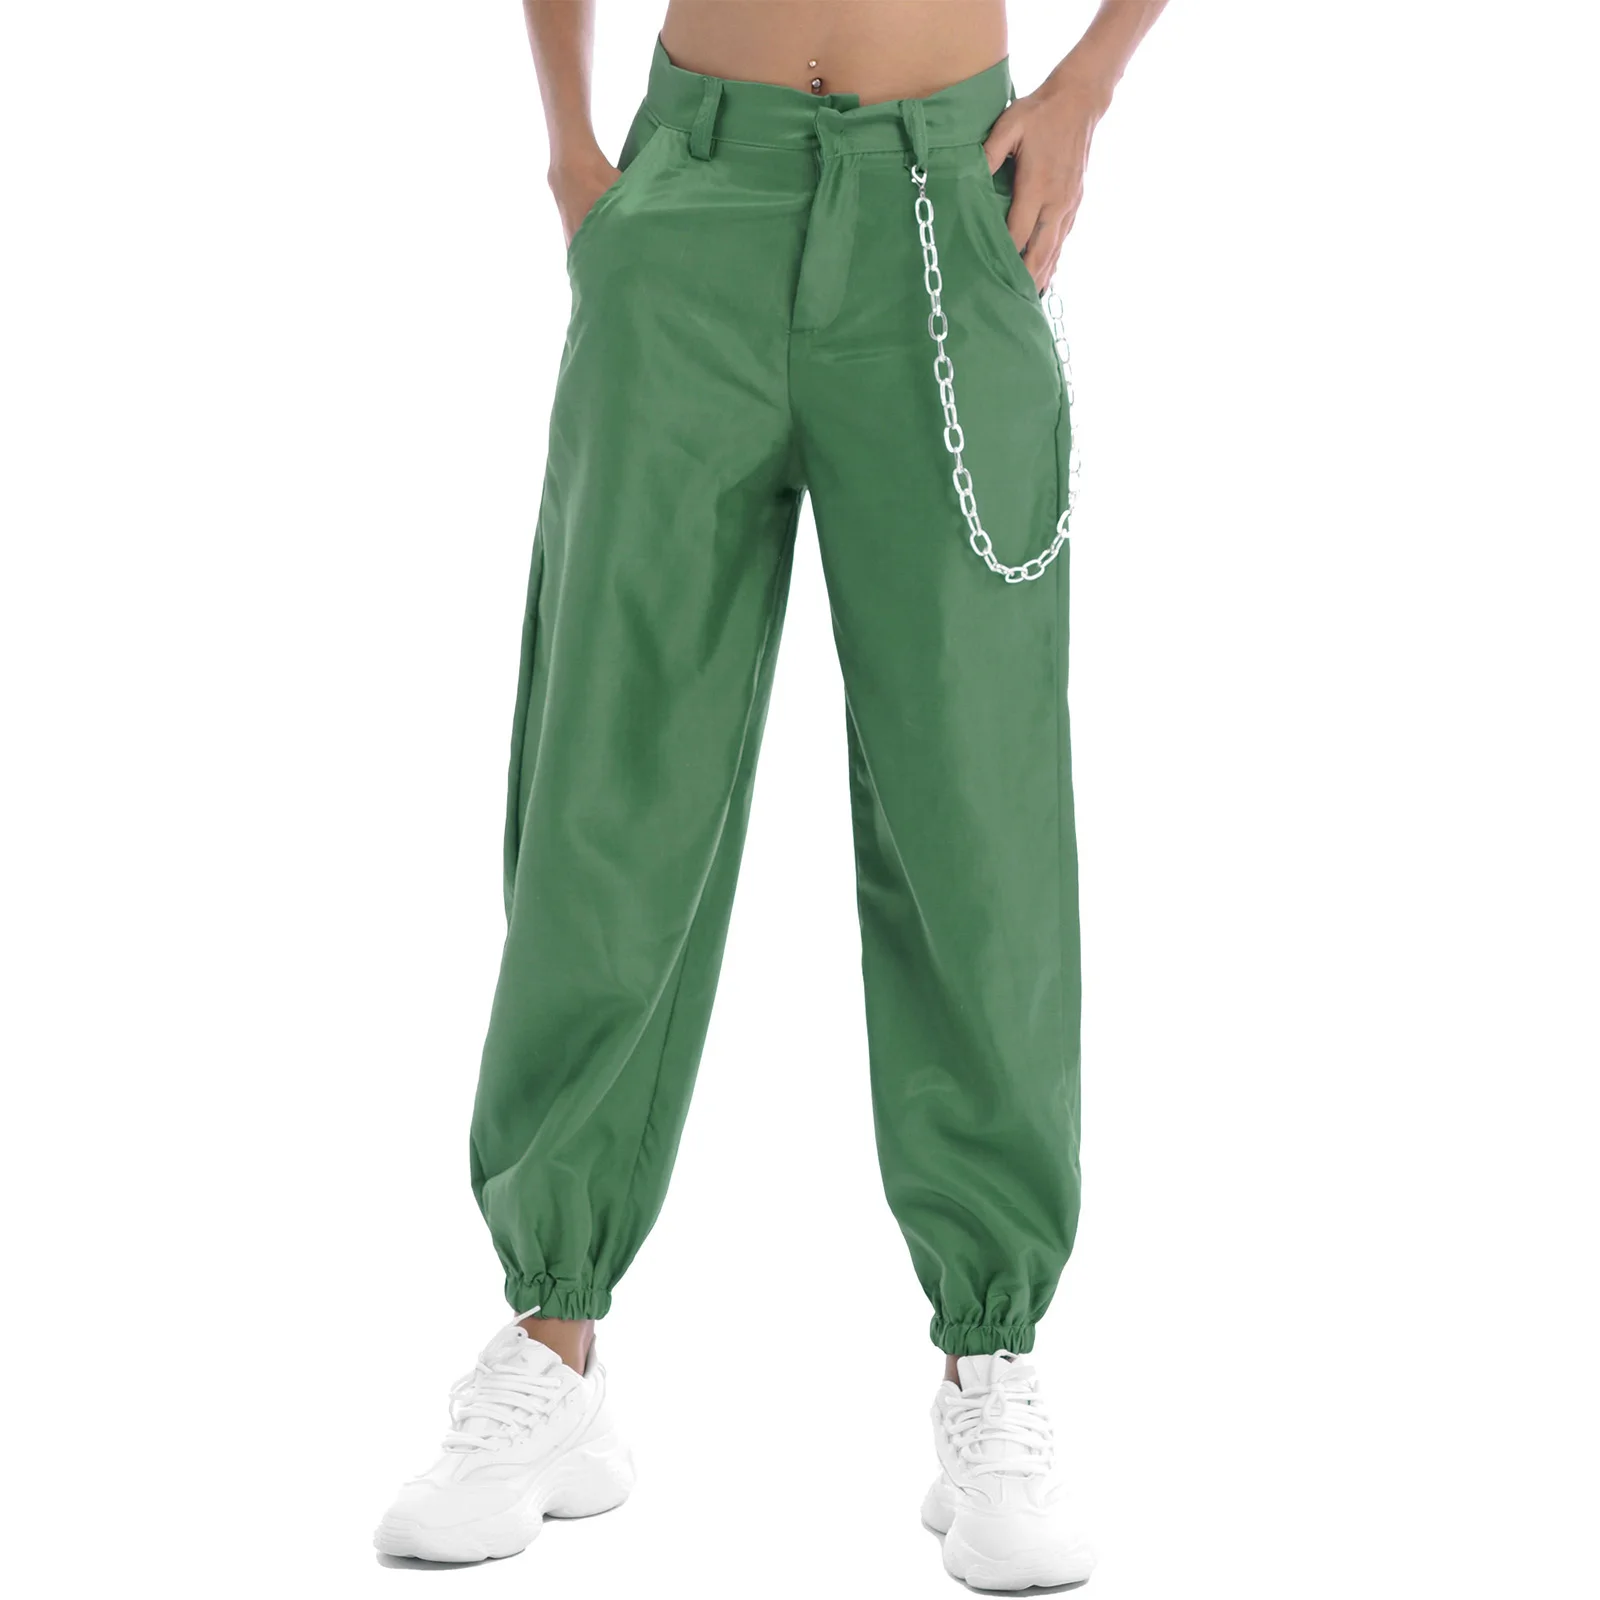 

2021 Summer Fashion Harem Pants Women Casual Gym Fitness Sport Pants High Waist Front Hidden Zipper Loose Pants Hiking Trousers